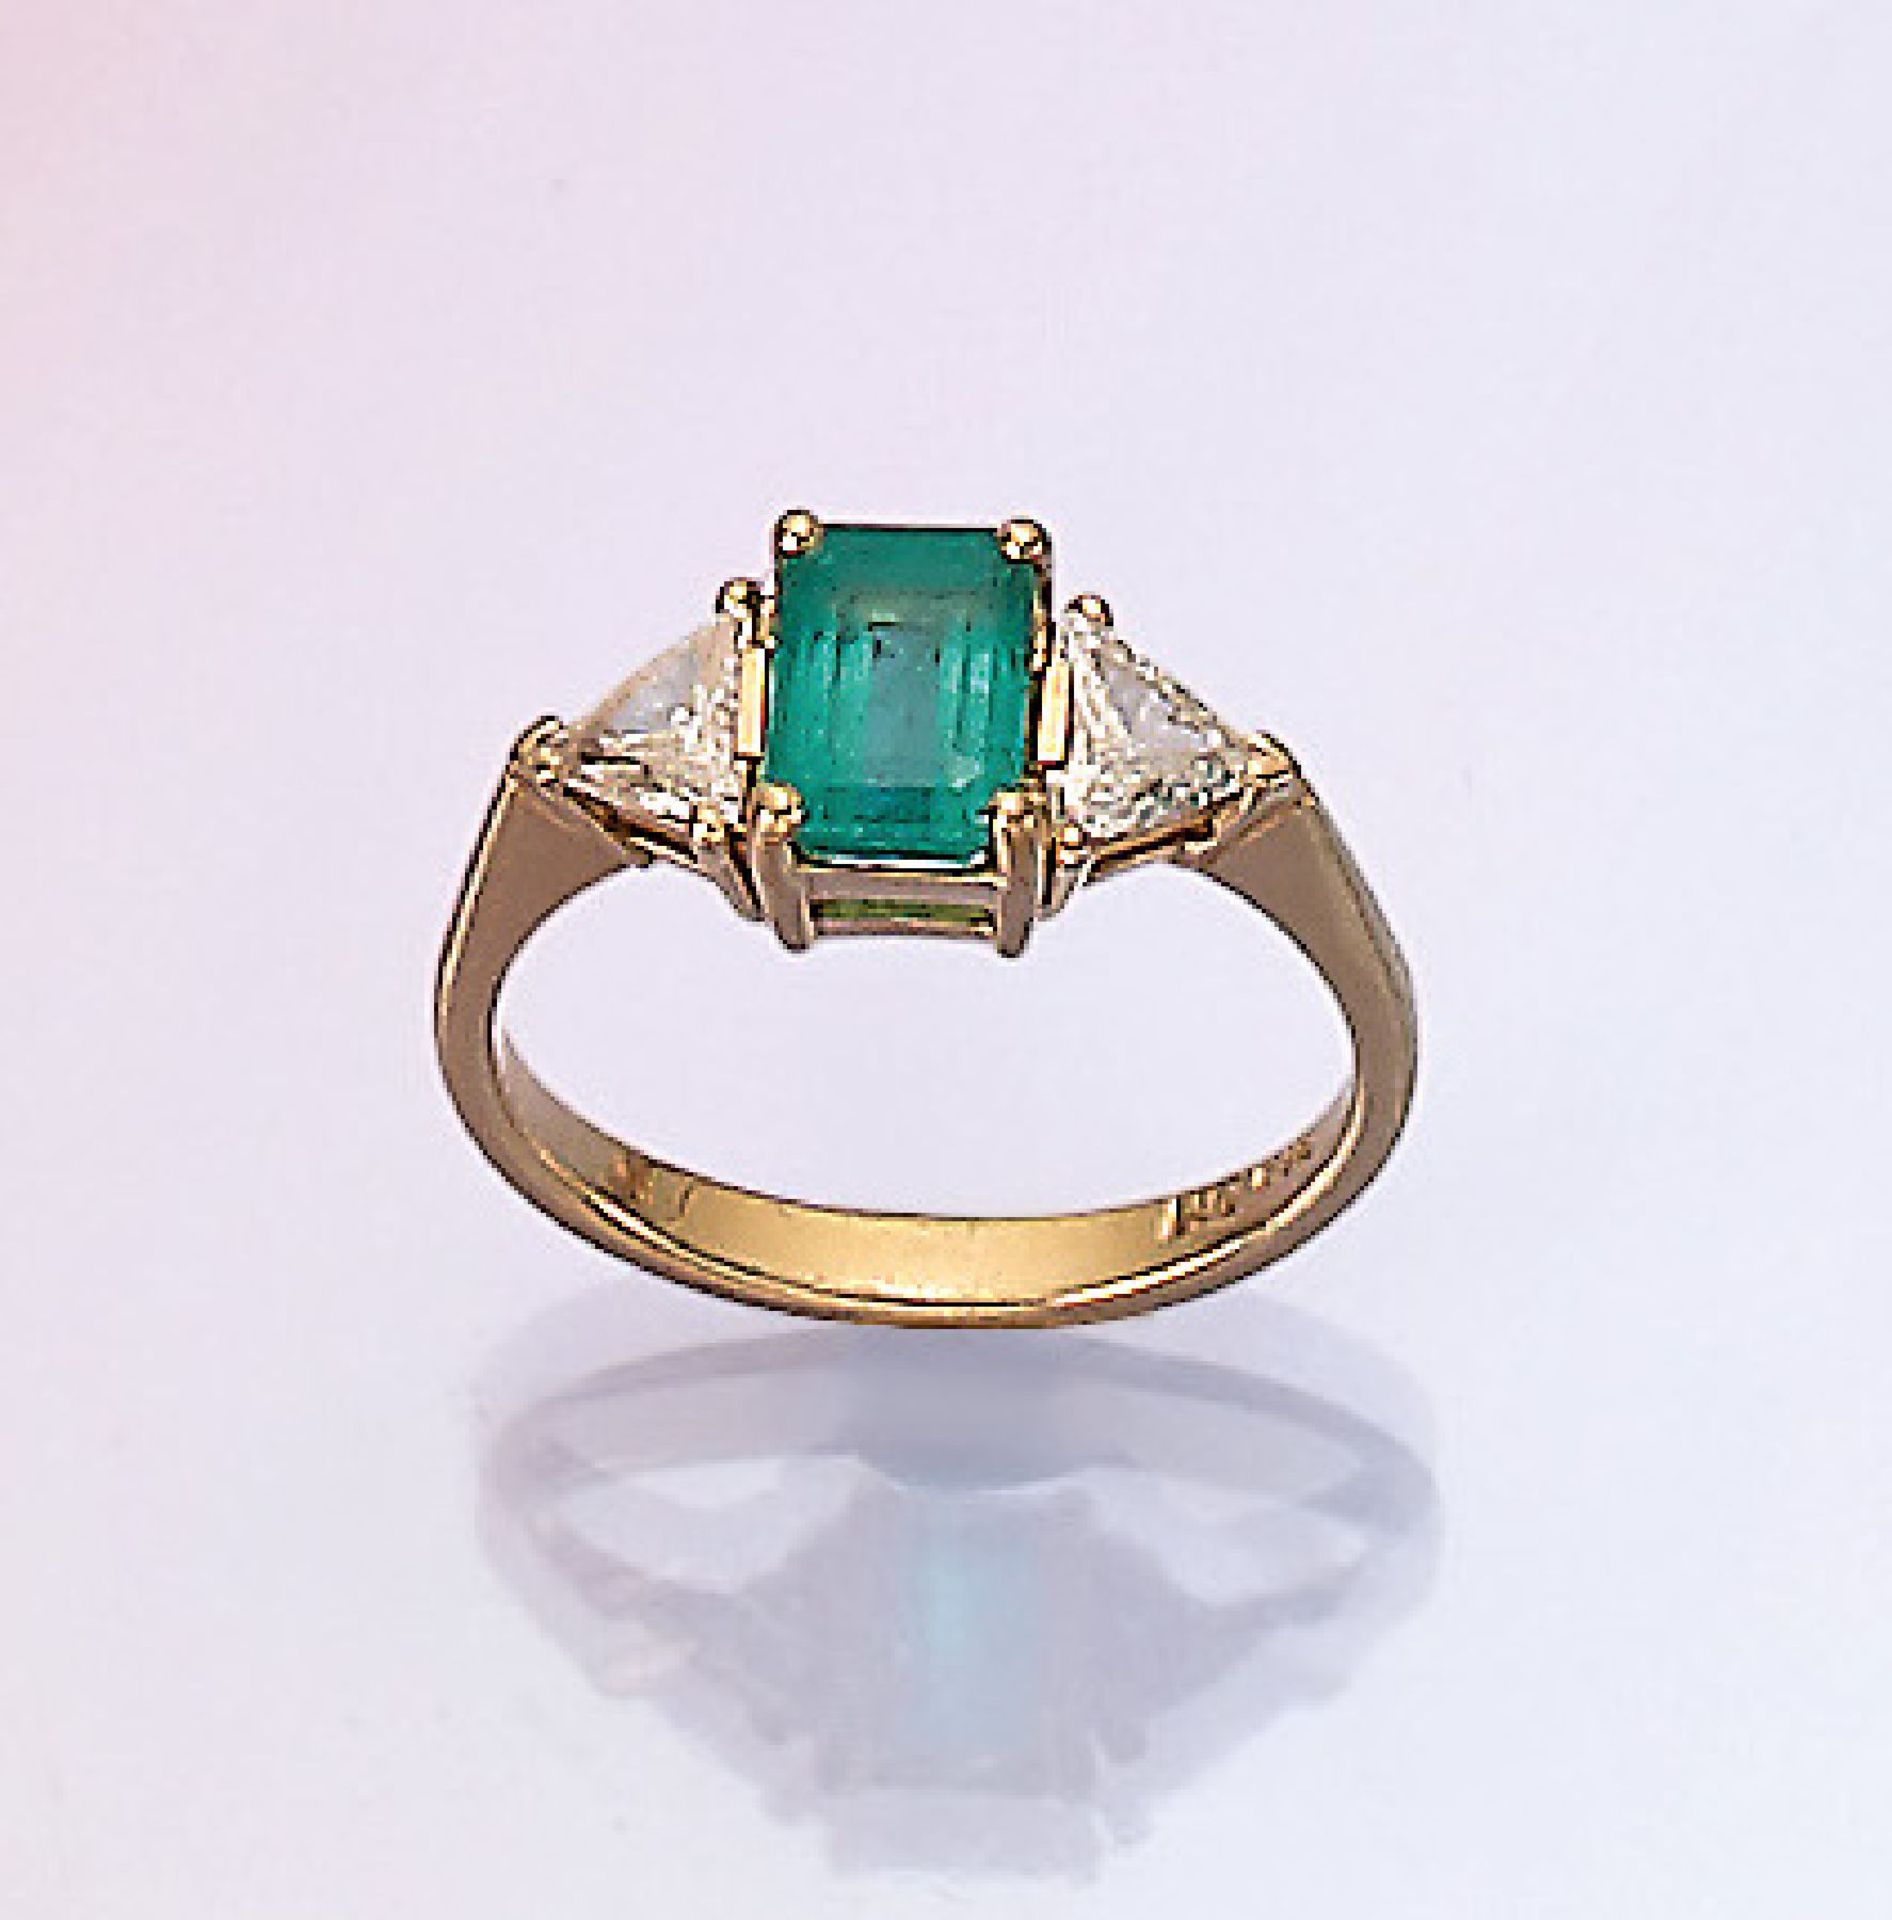 18 kt Gold Ring mit Smaragd und Diamanten, GG 750/000, Smaragd im Emerald Cut ca. 1.0 ct,2 Diamant-